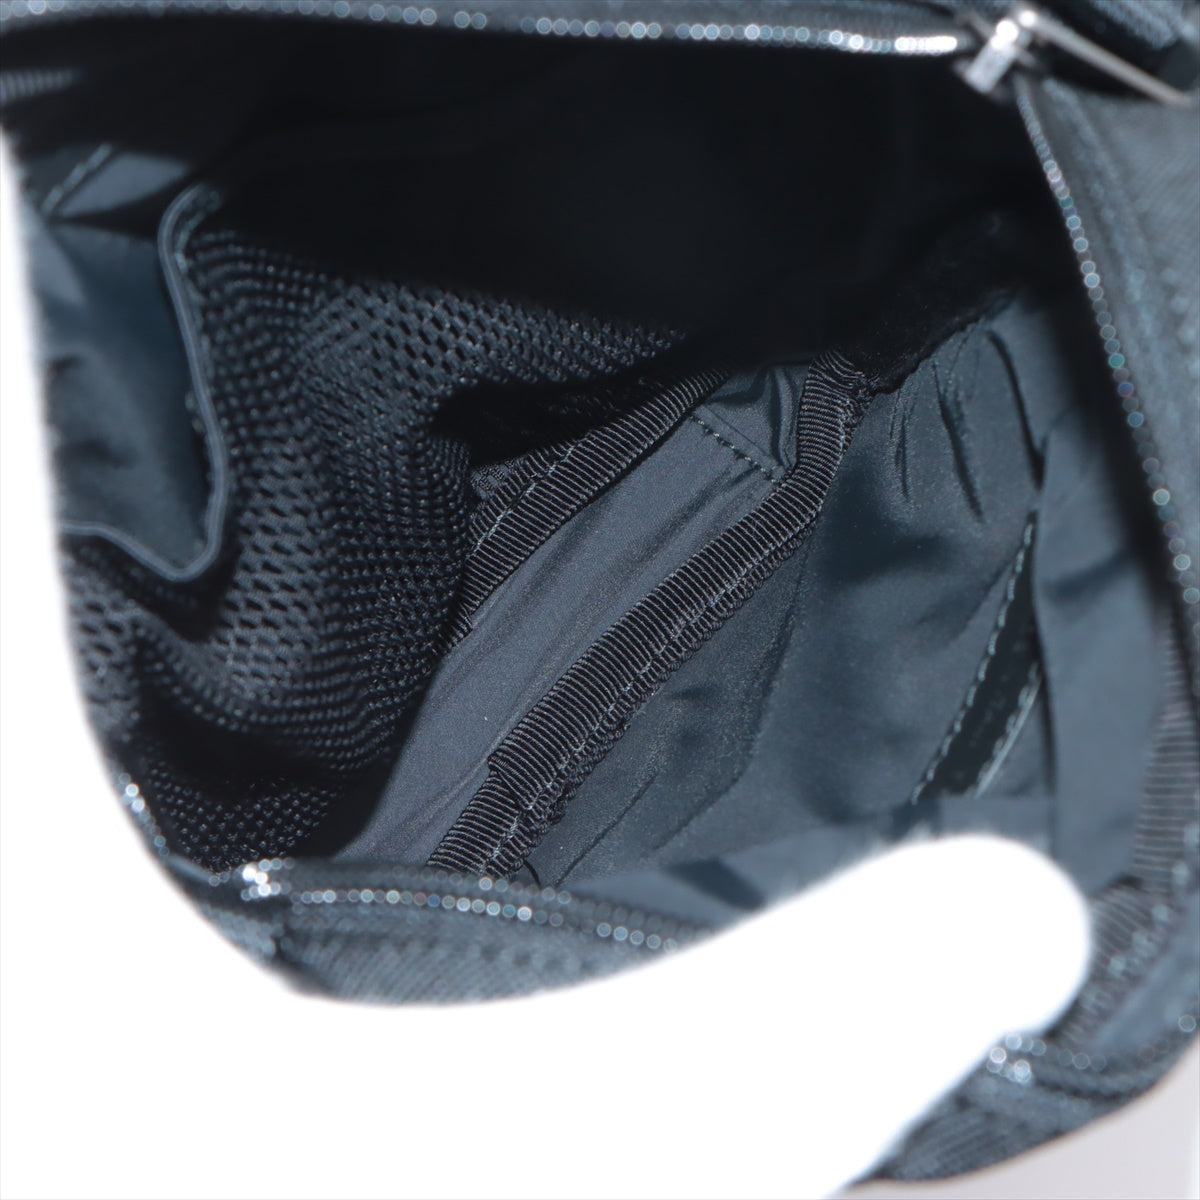 Balenciaga Sports Sustainable Nylon Shoulder Bag Black 638657